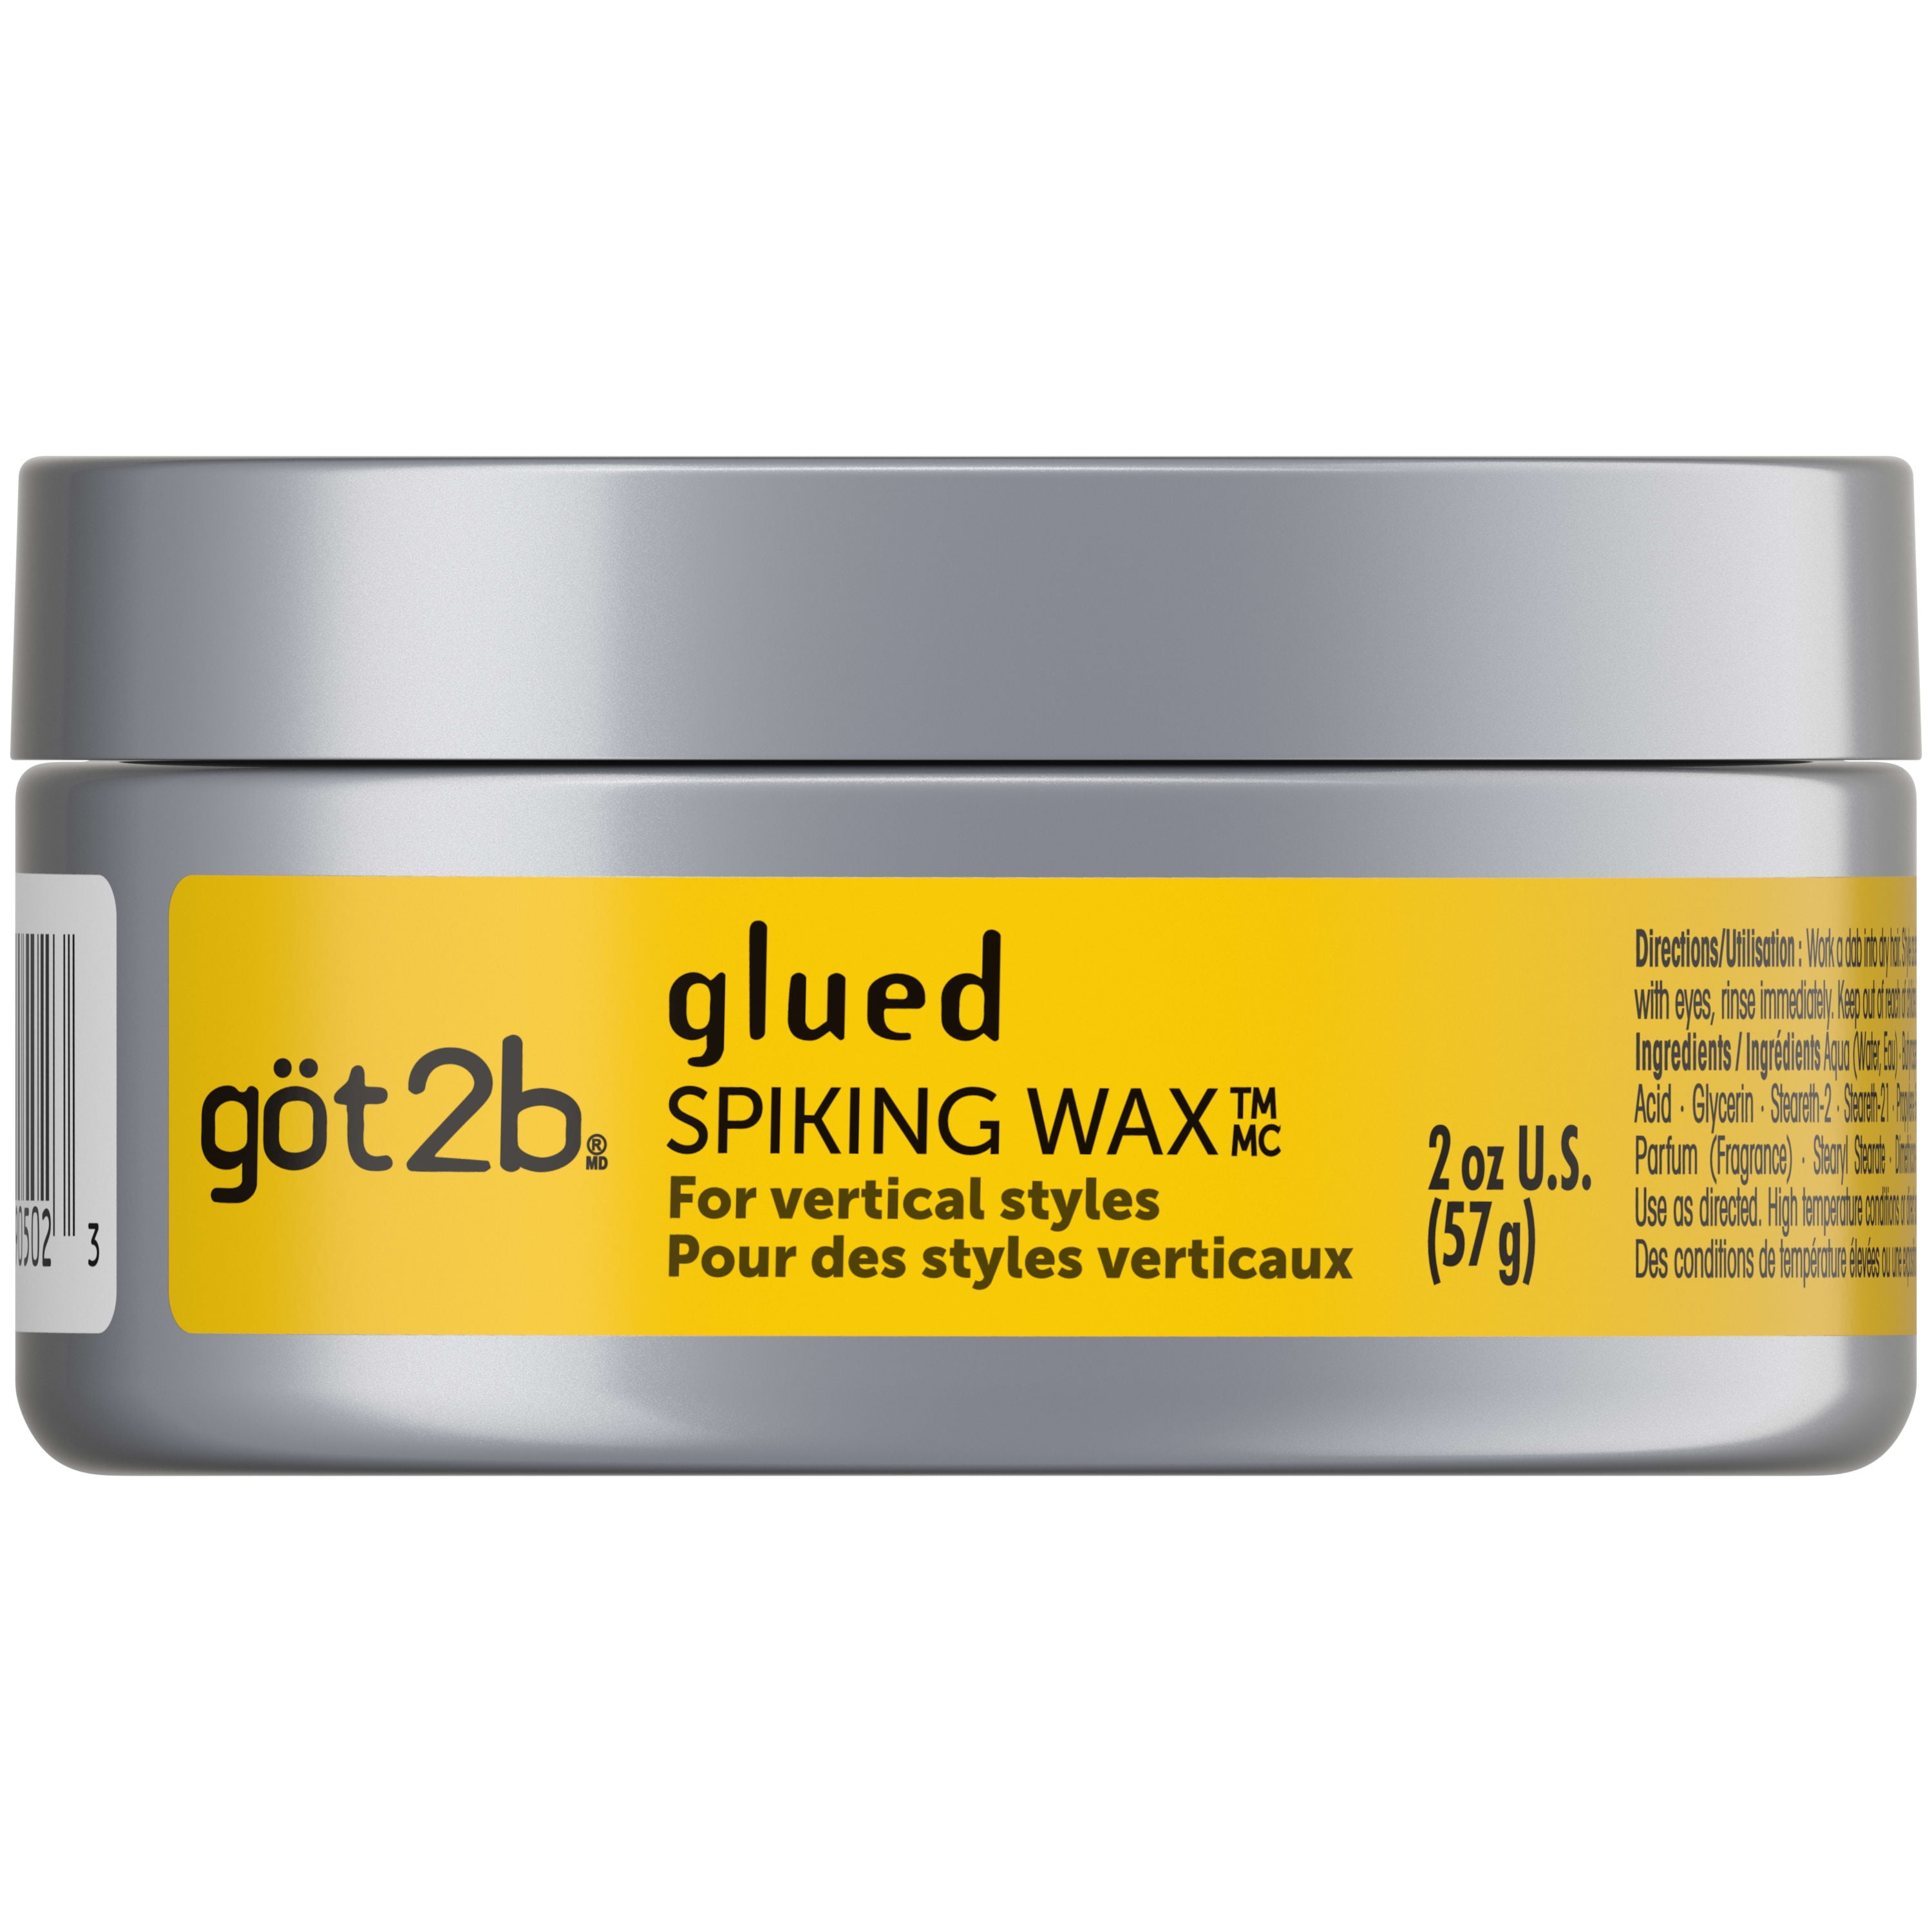 göt2b Glued Spiking Hair Wax, Fierce Holding Power, 2 oz 